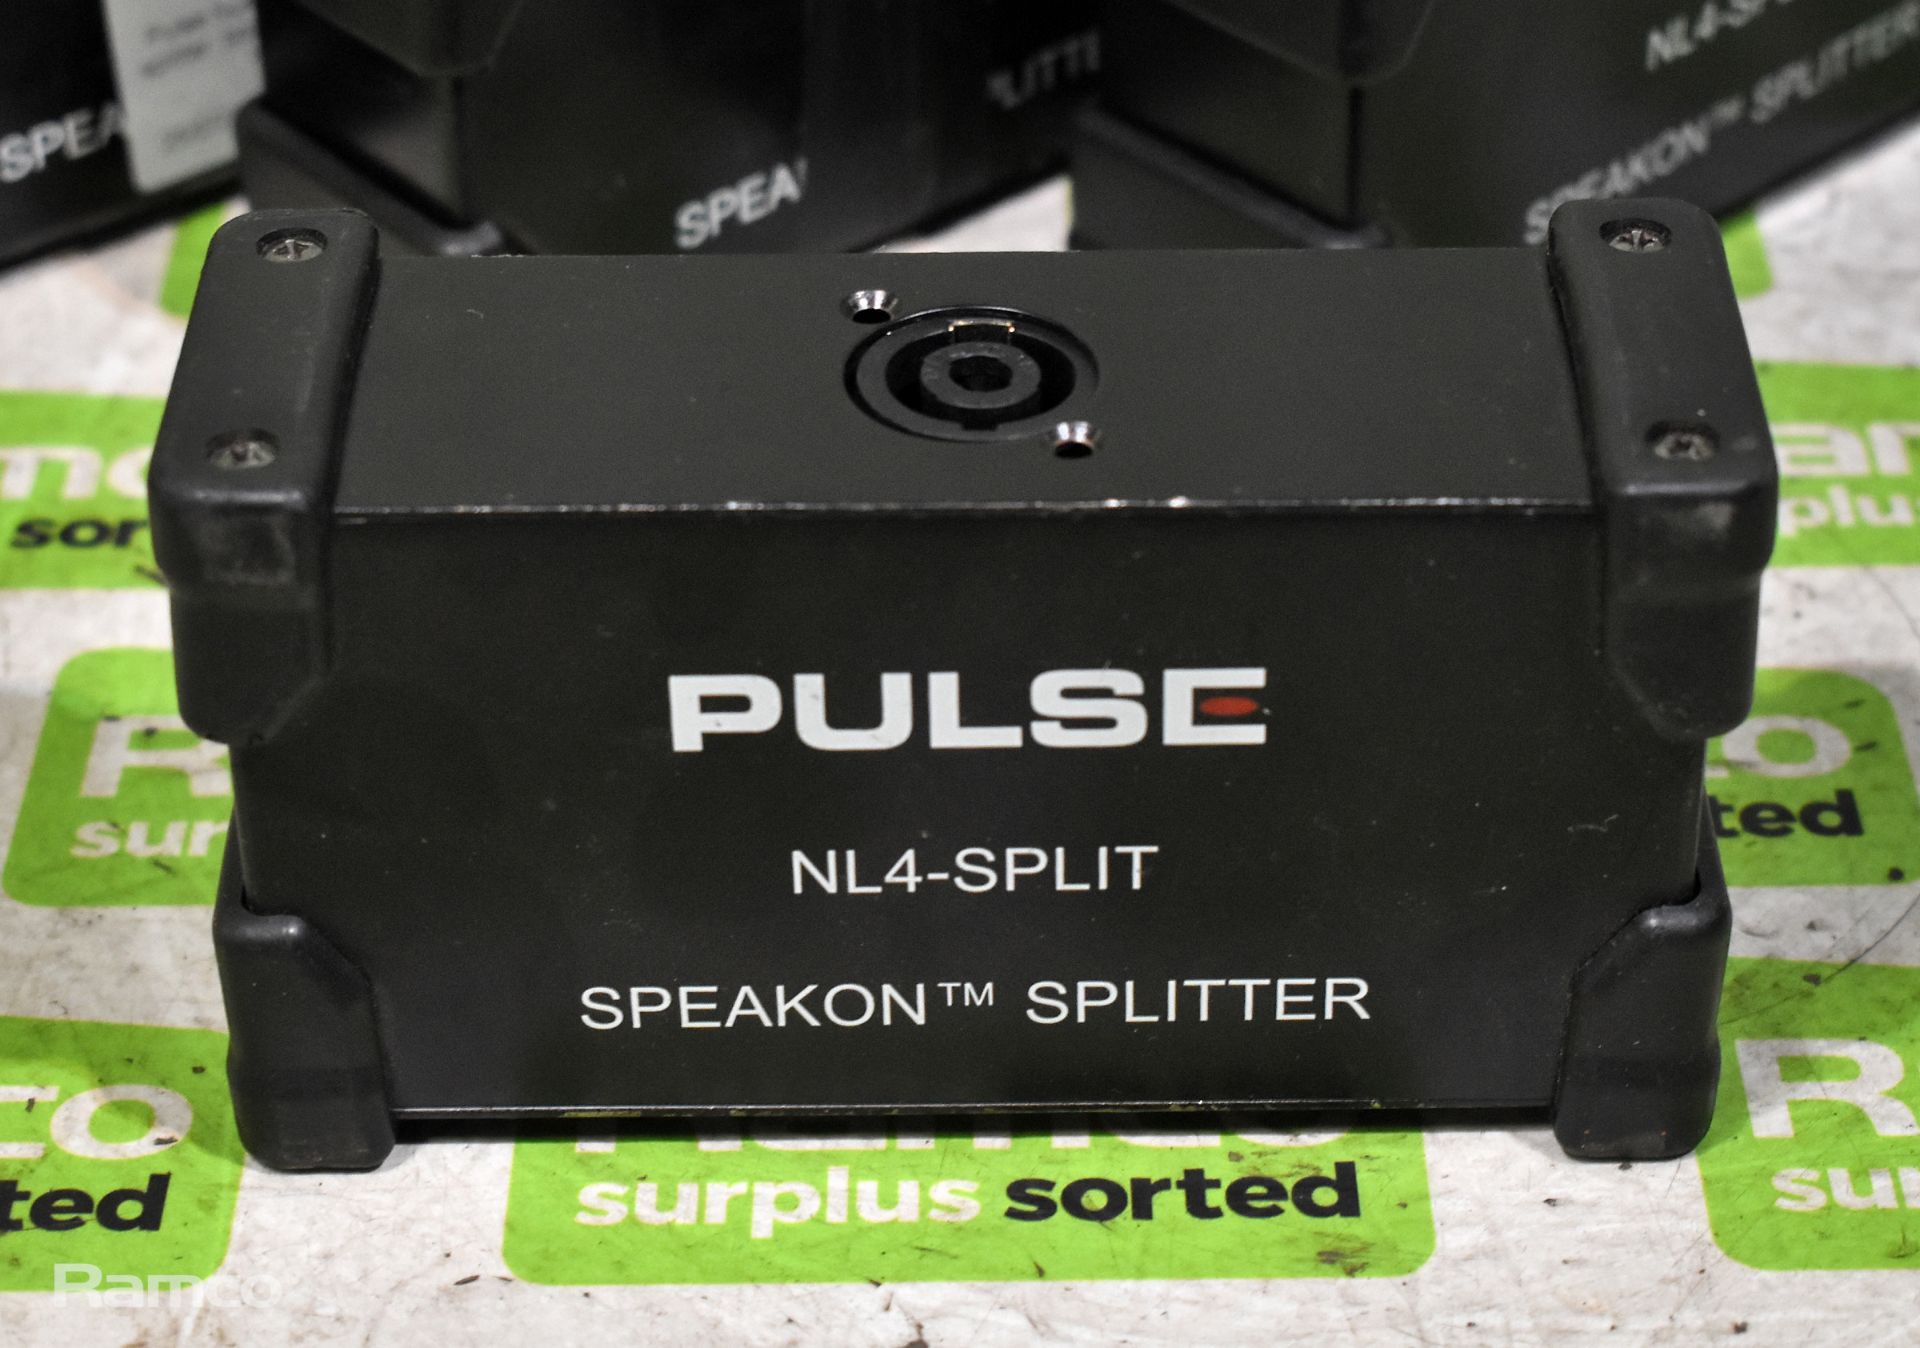 4x Pulse NL4-SPLIT Speakon splitter boxes - L 150 x W 80 x H 50mm - Image 2 of 3